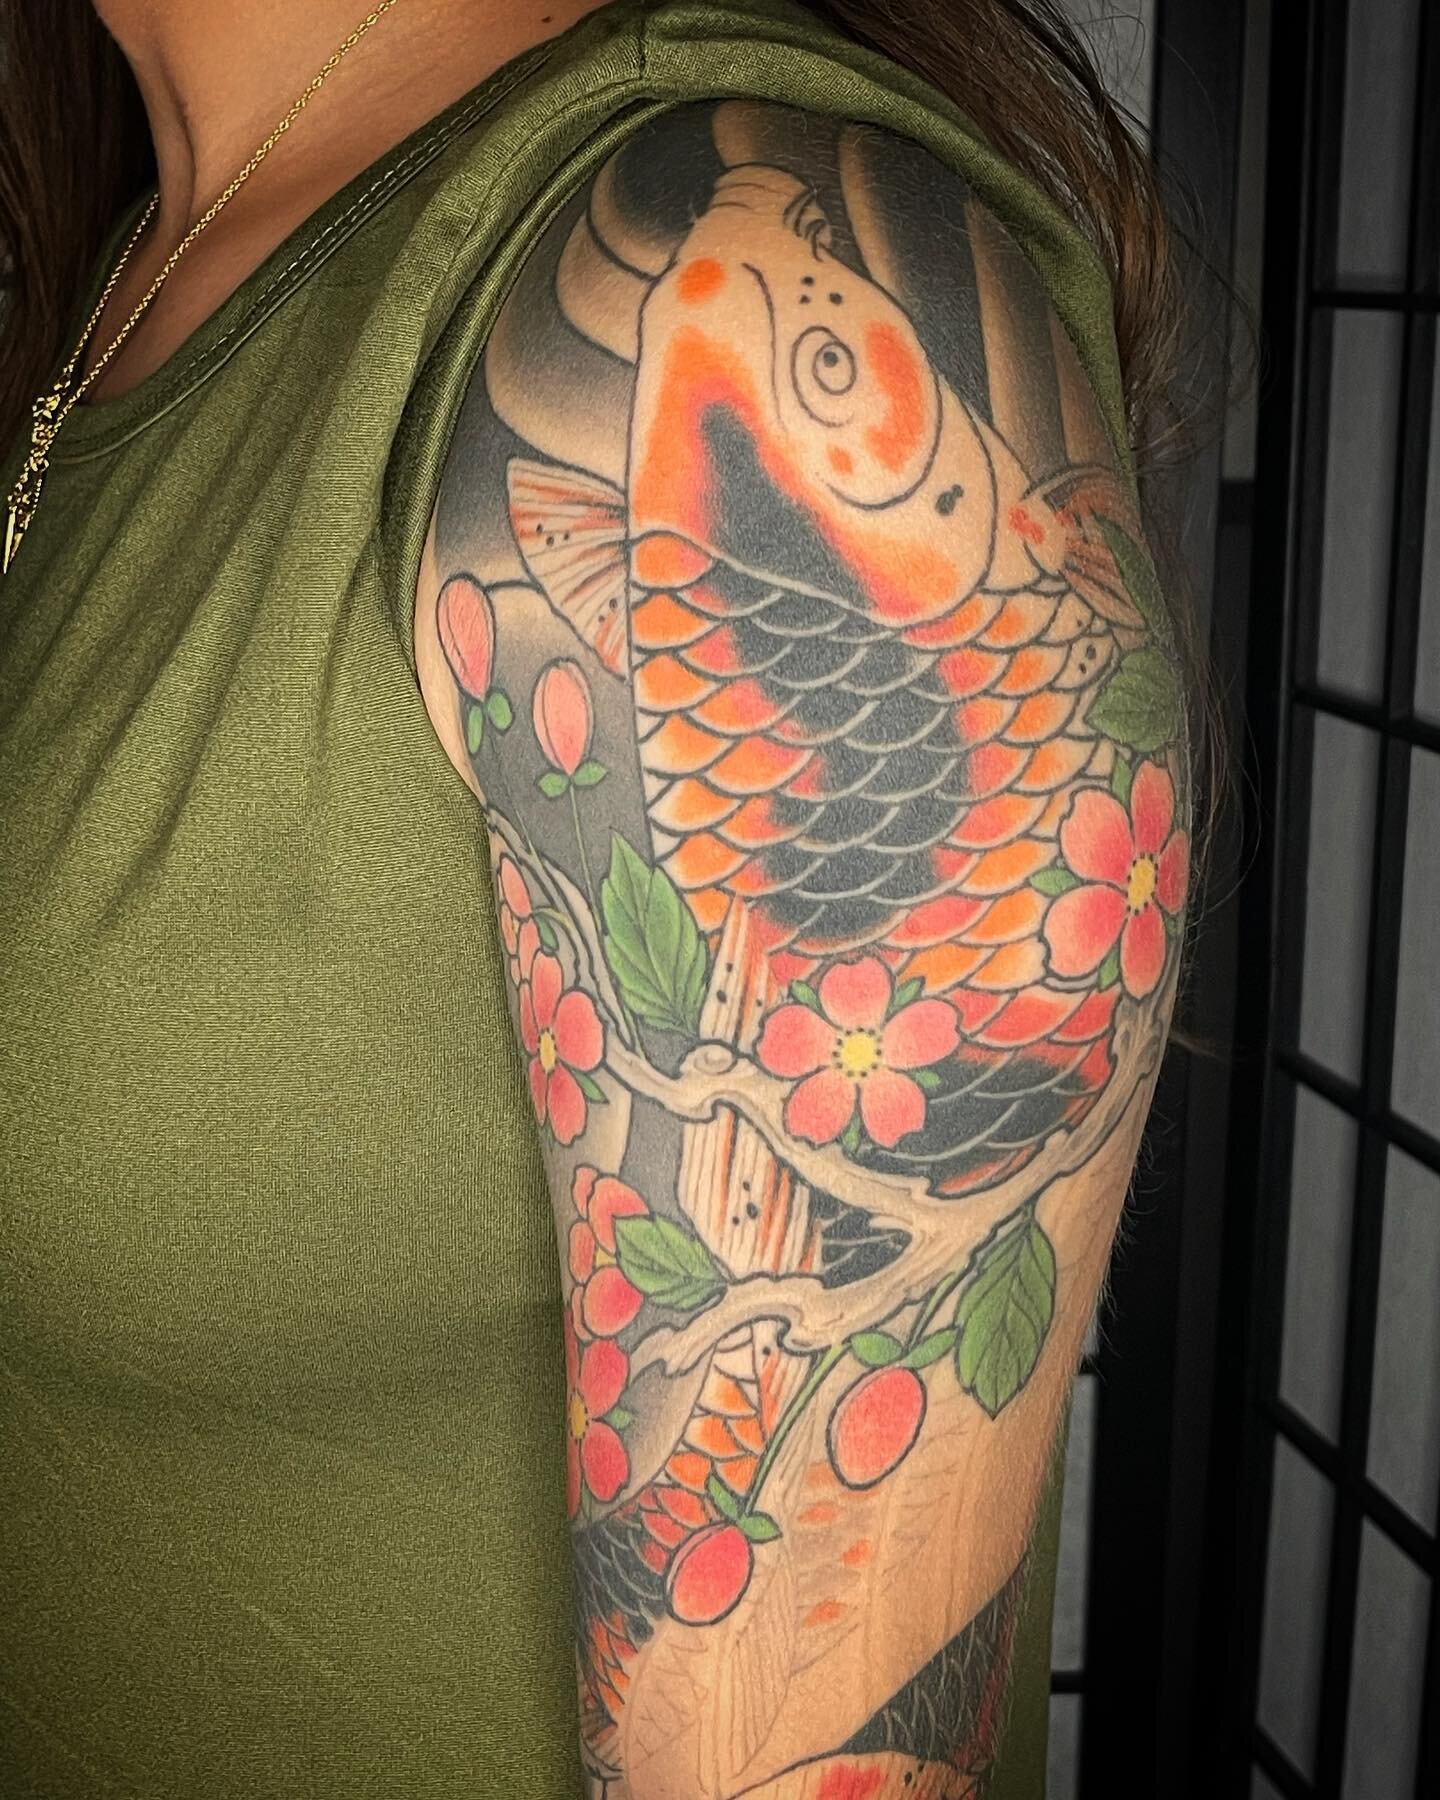 Awesome Colour Work on this Custom Lizard Tattoo by Kate @ducklore_tattoos  #blackenginetattoo #tattoo #tattoos #ink #inked #torontotattoo... |  Instagram